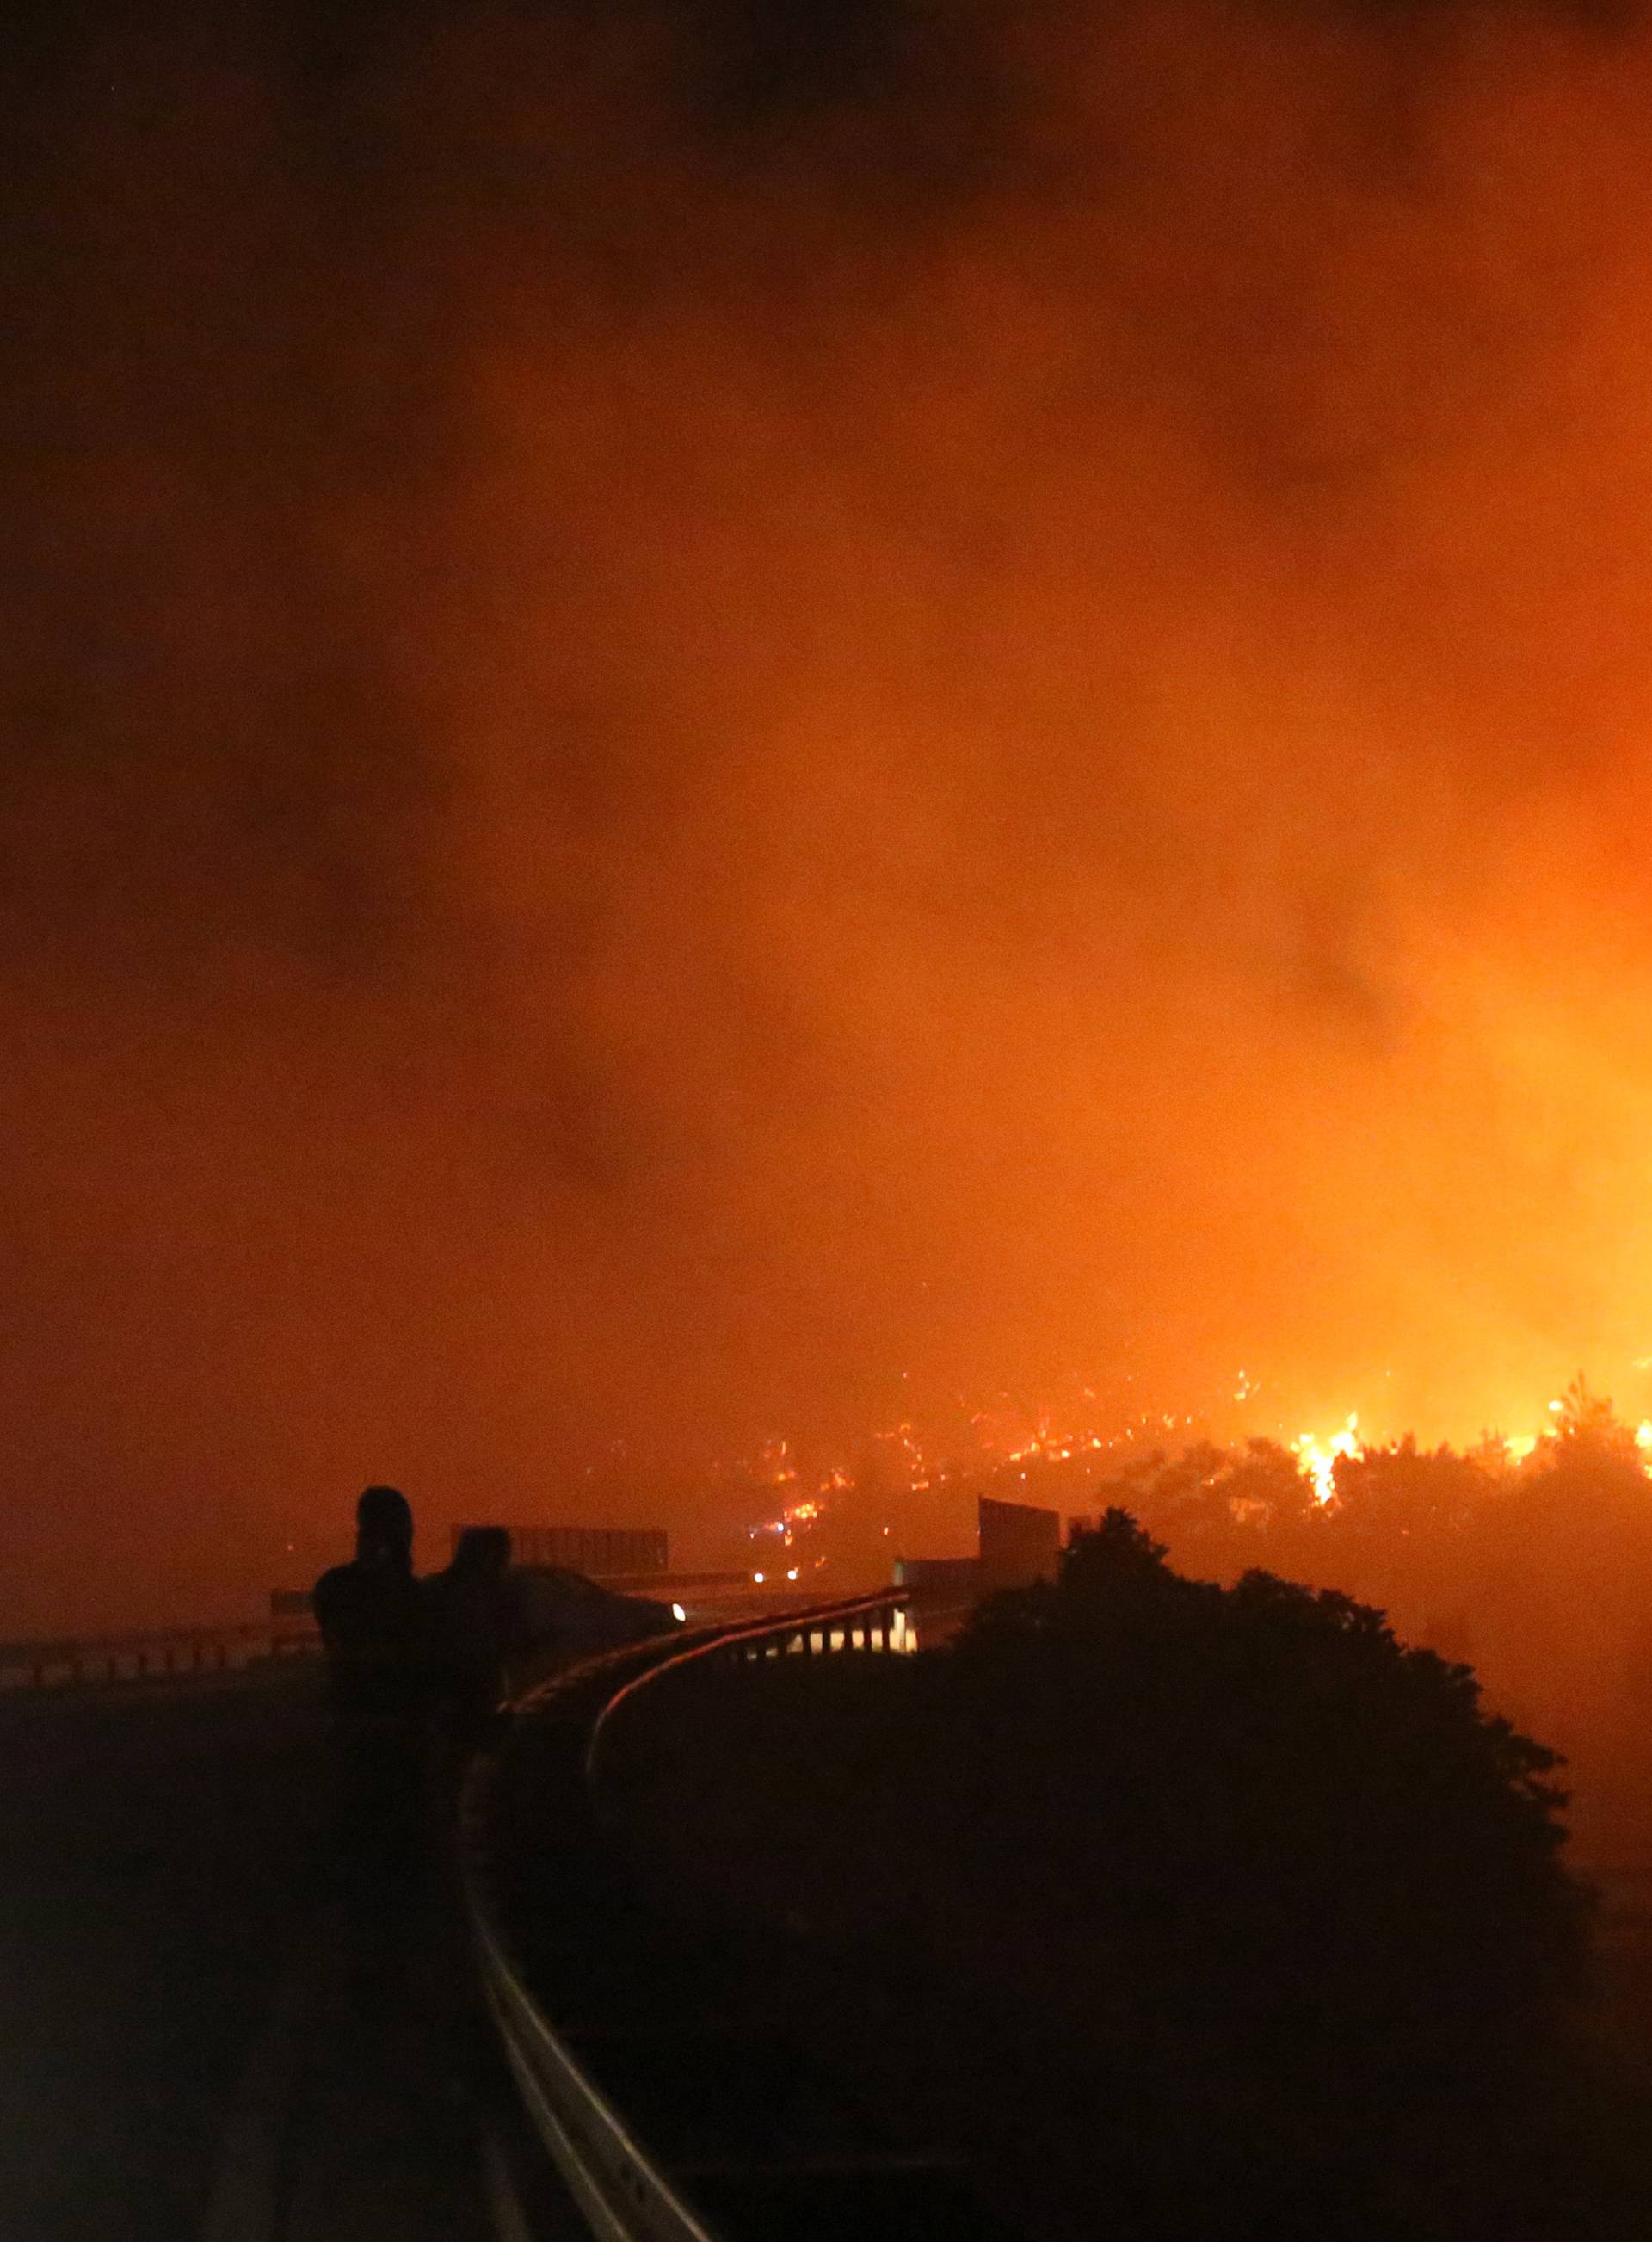 Buknuo veliki šumski požar kod Omiša, vatra se brzo širi